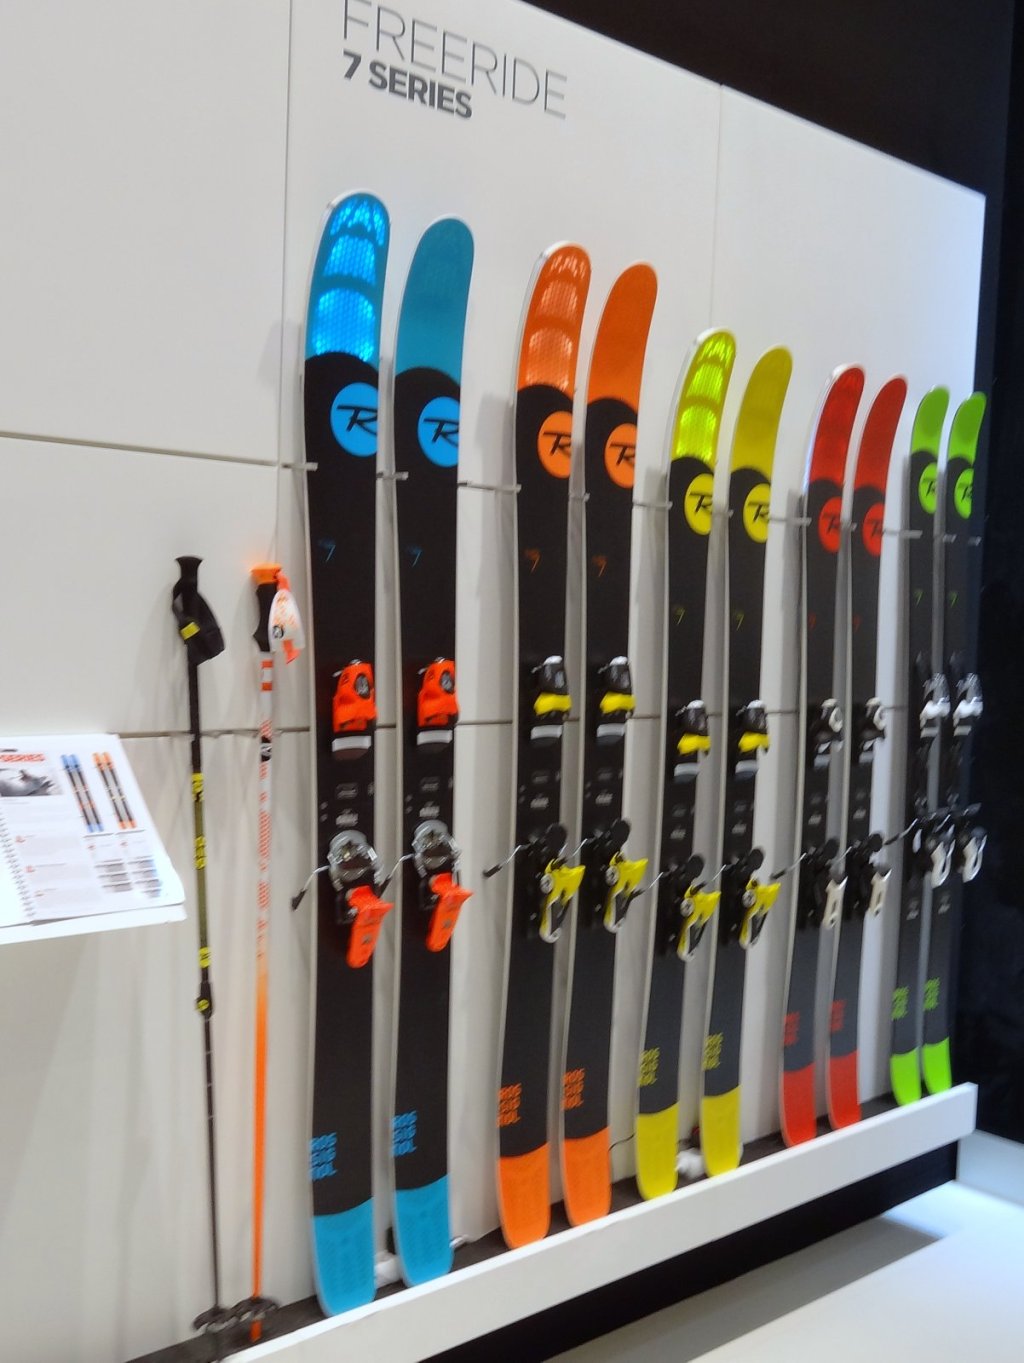 Rossignol freeride skis, unchanged design